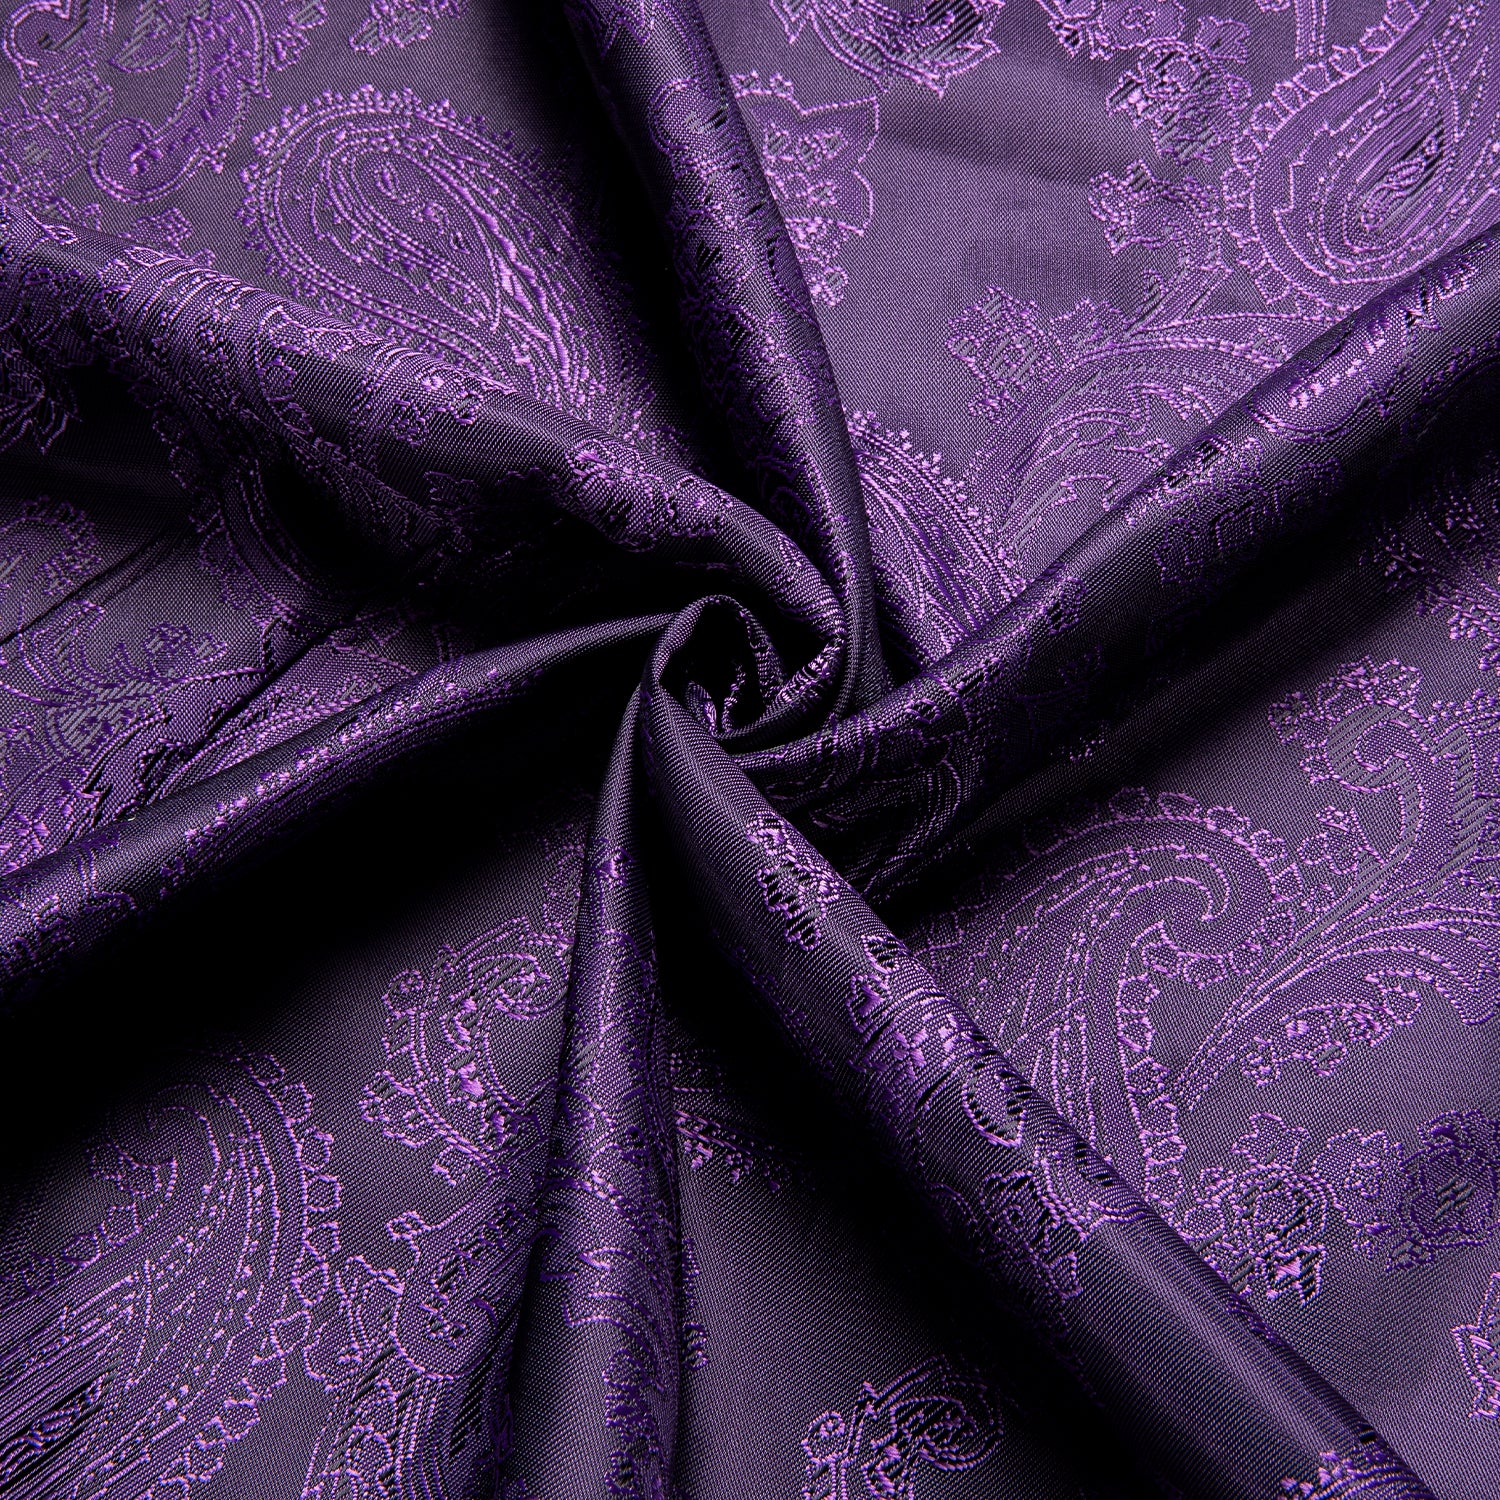 Purple Paisley Silk Men's Shirt